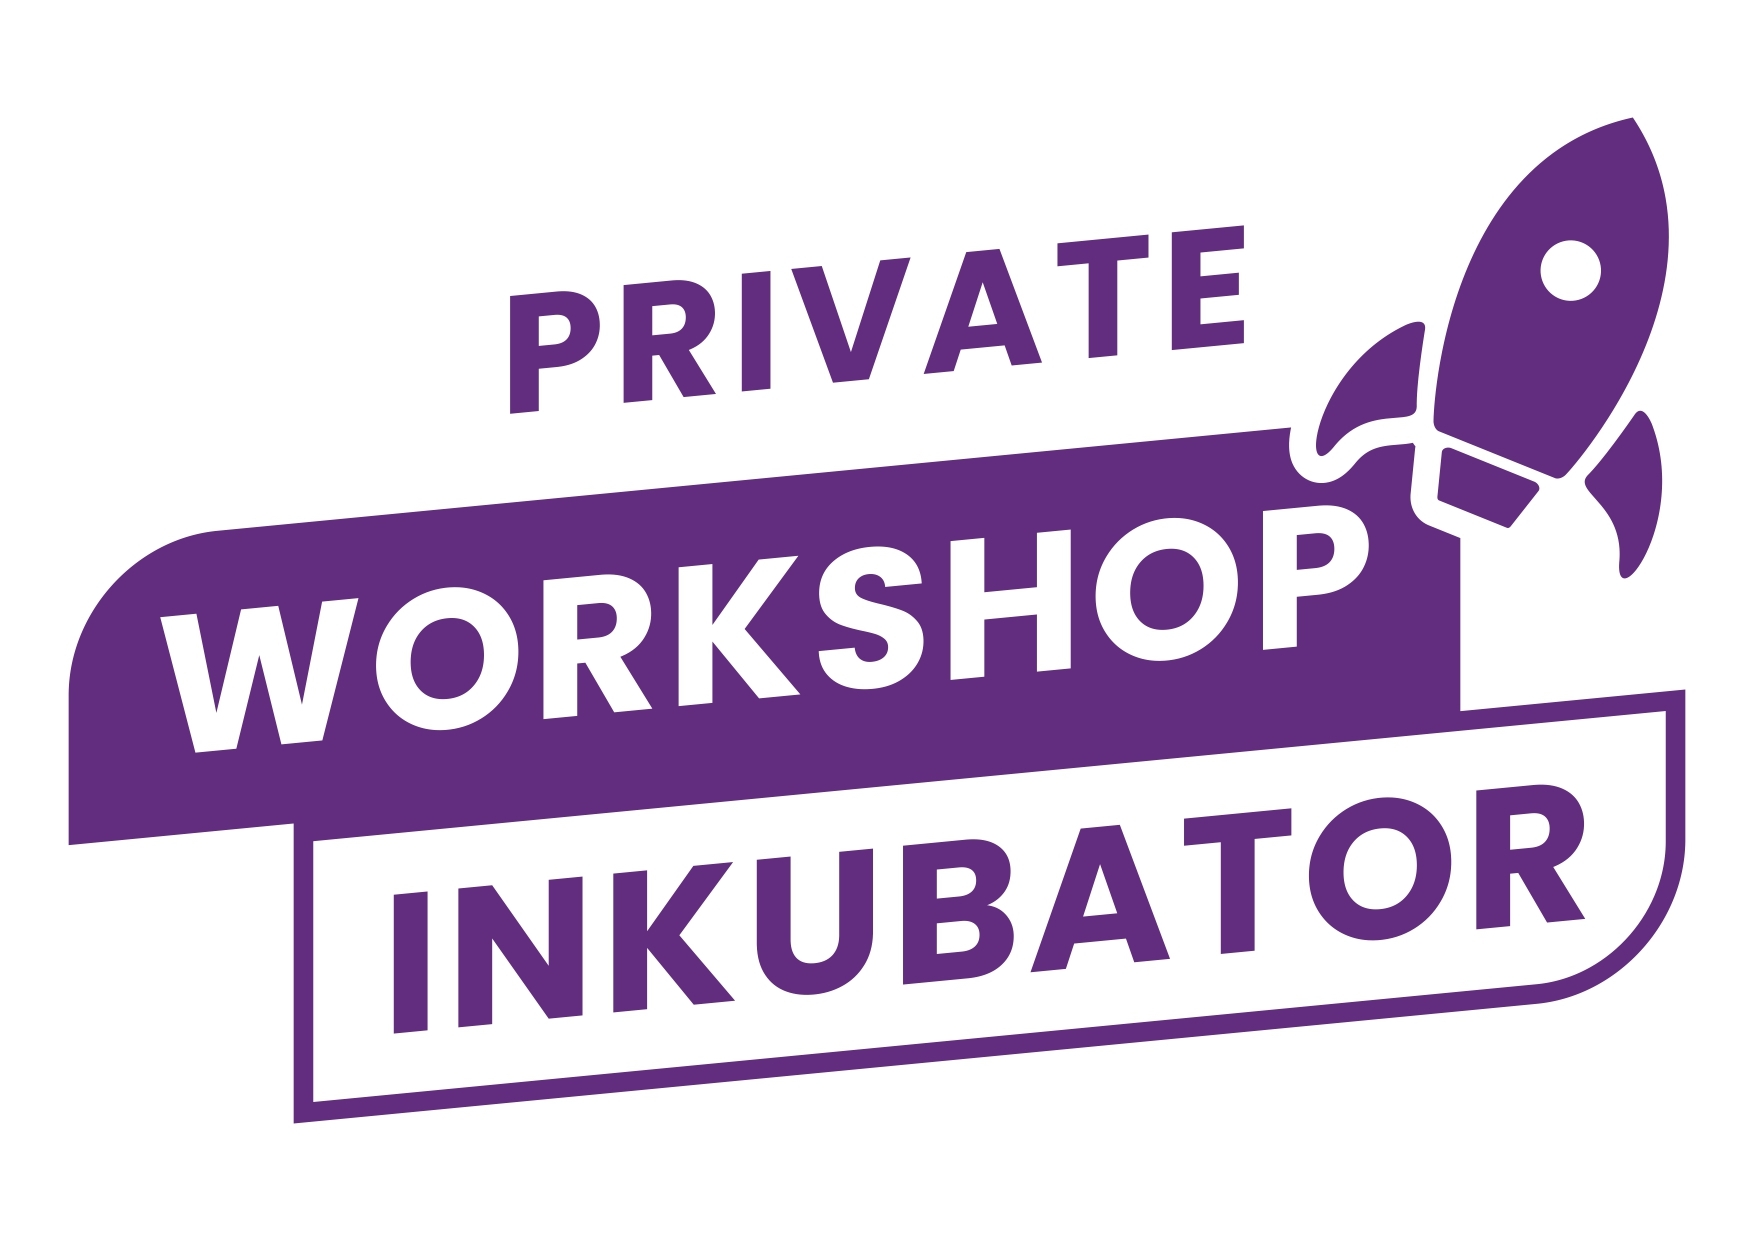 Private Workshop Inkubator